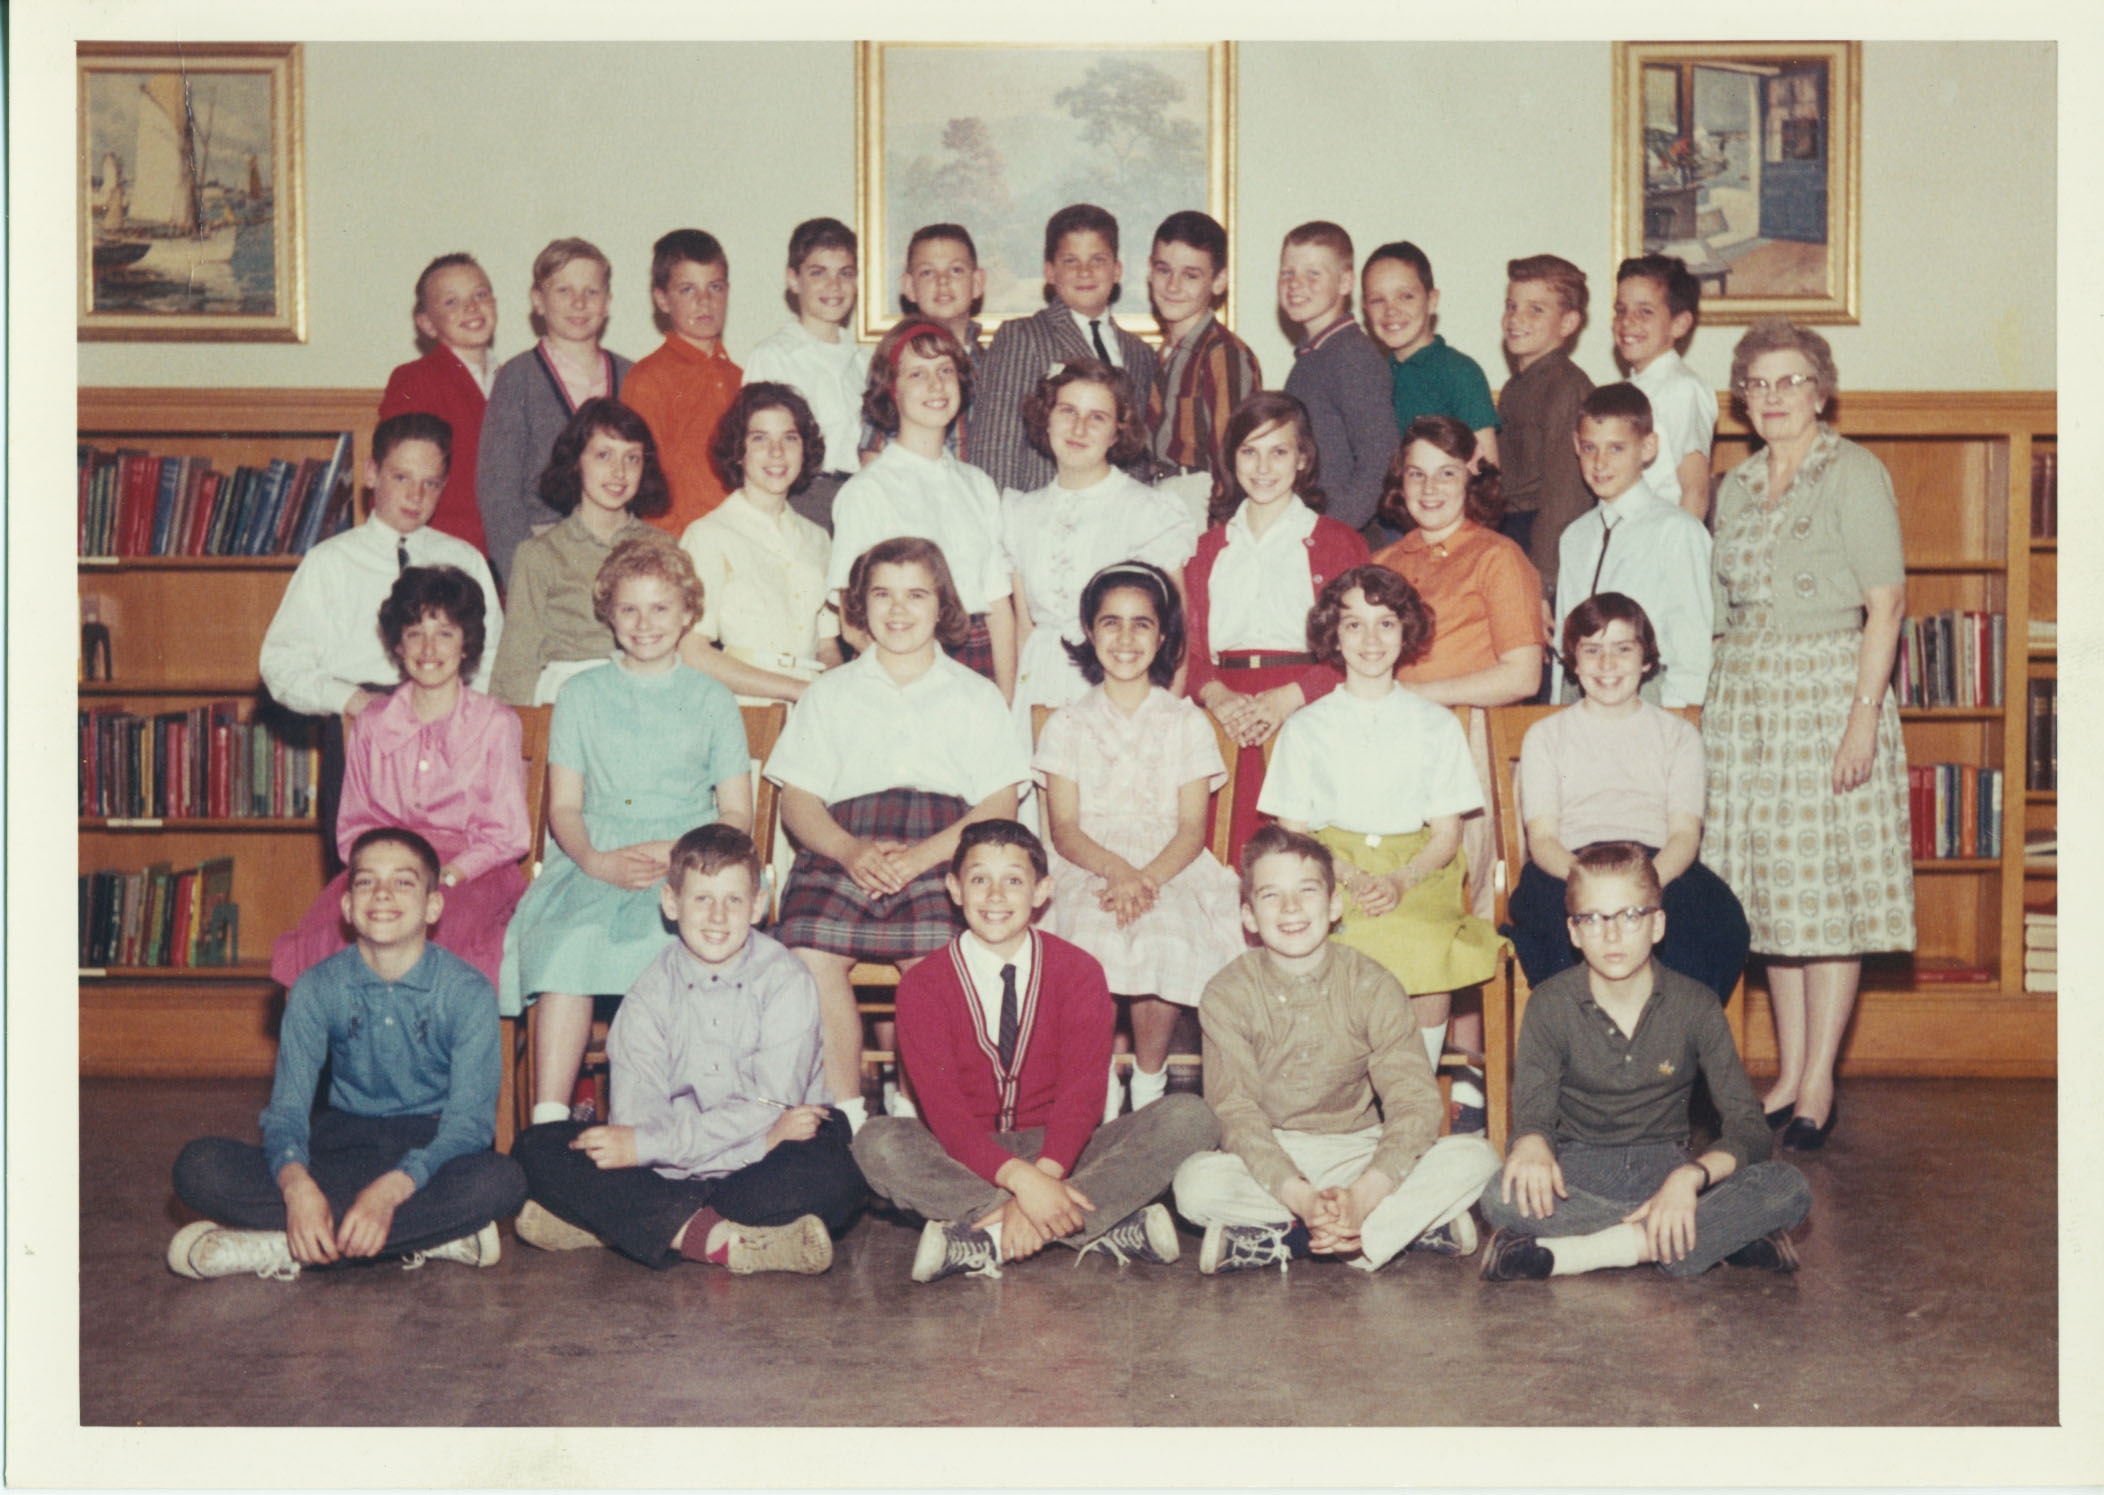 Garrettford Elementary School (Teacher Unknown) 6th Grade Class (1960-61)
